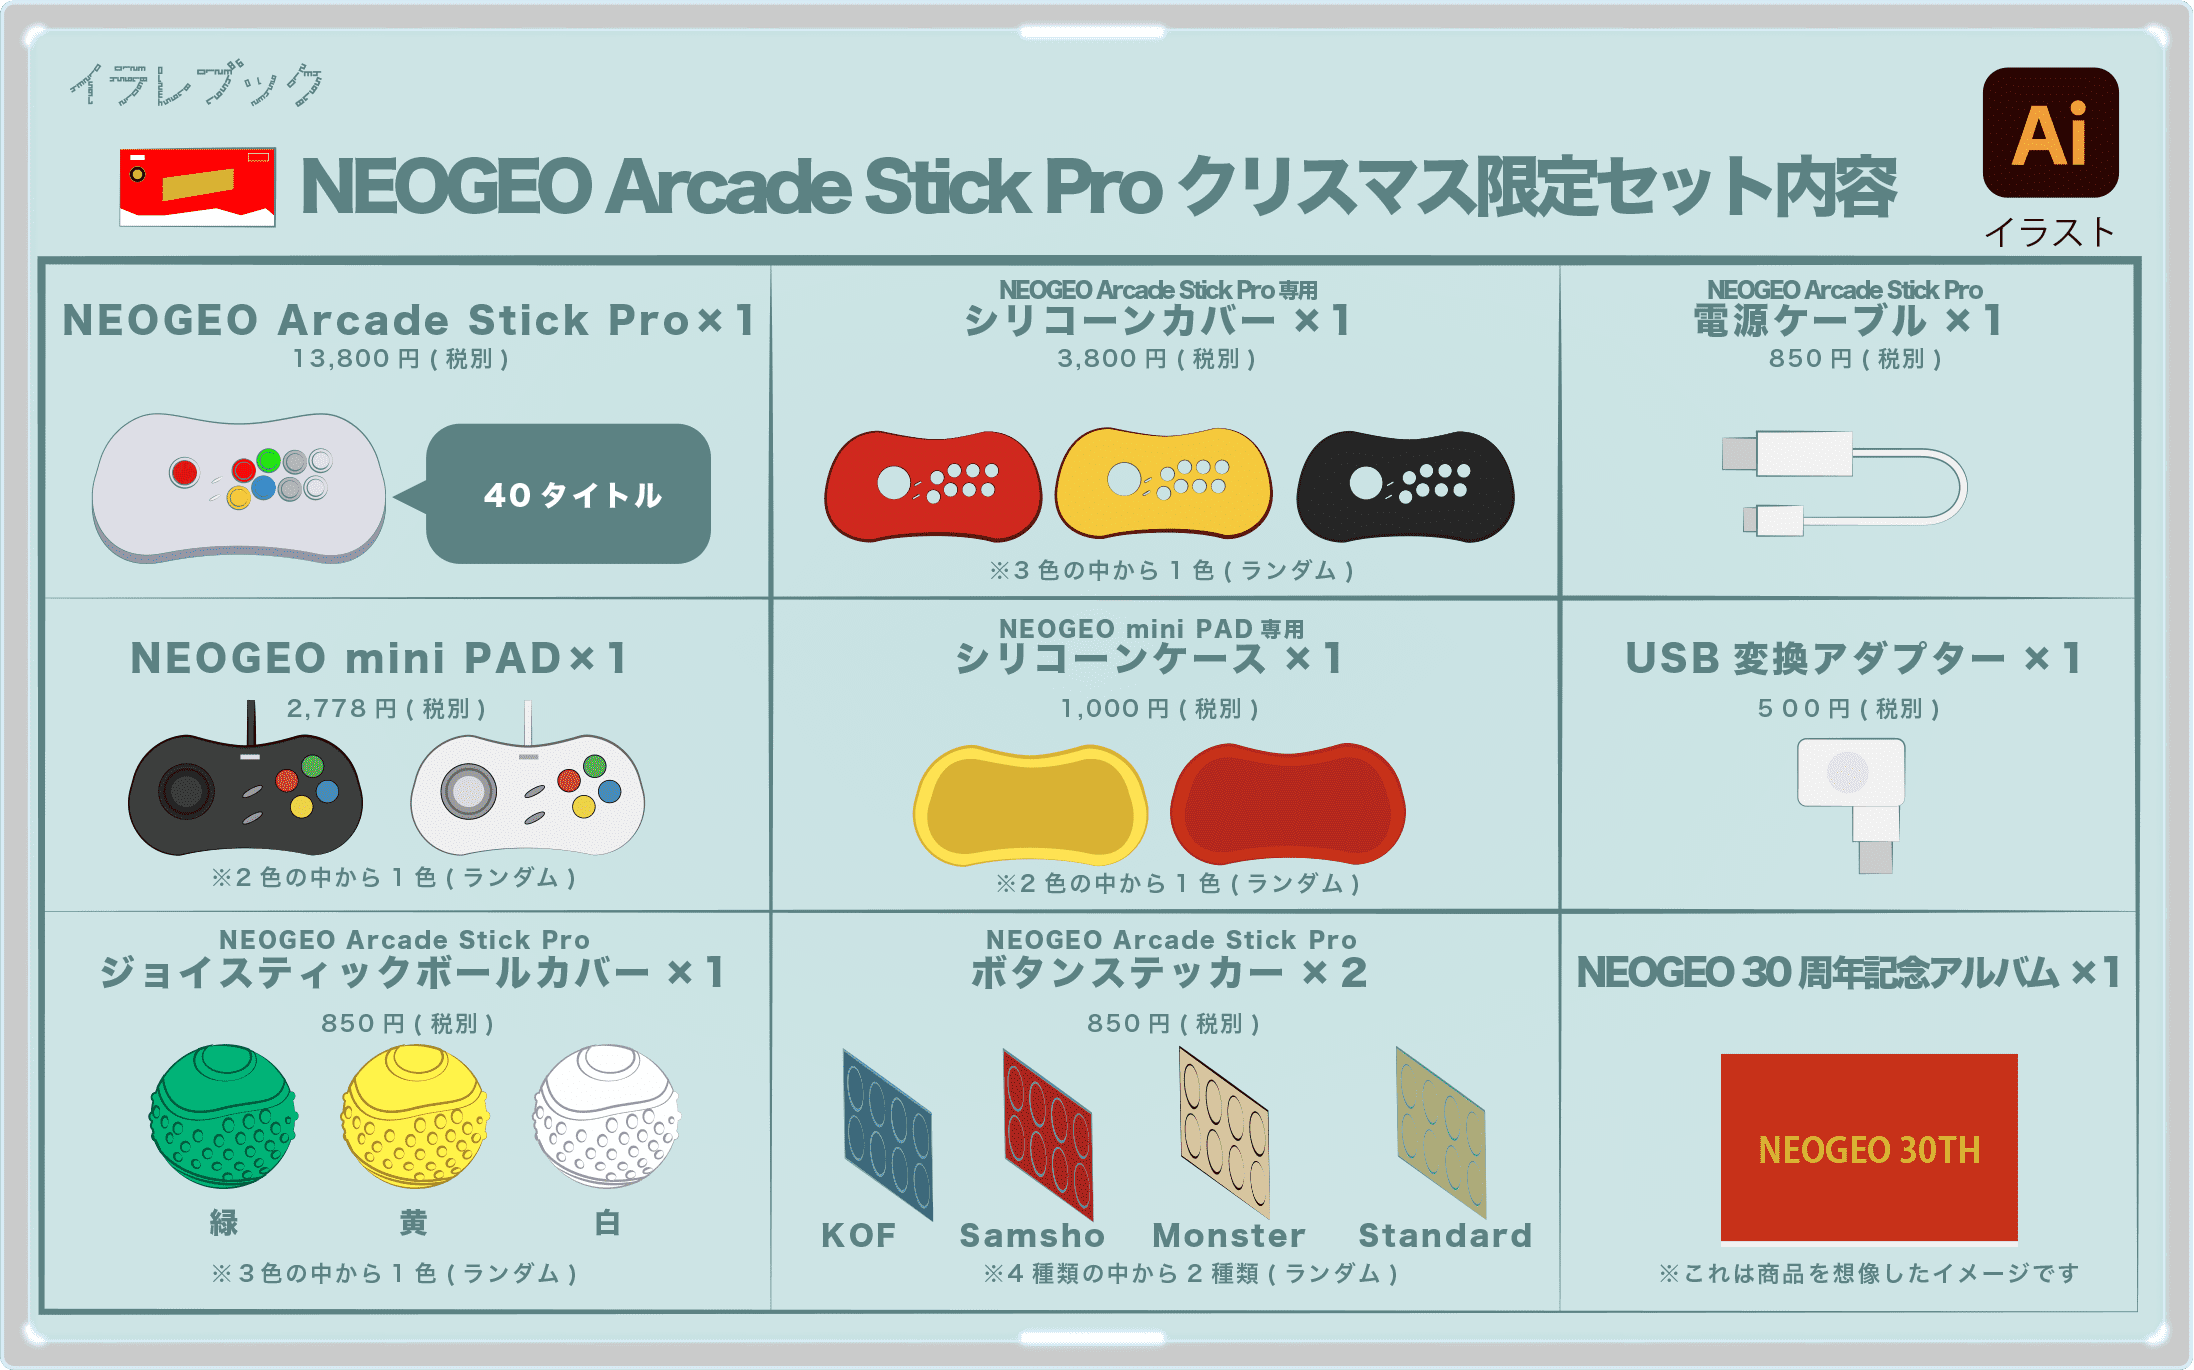 NEOGEO Arcade Stick Pro クリスマス限定セットの内容